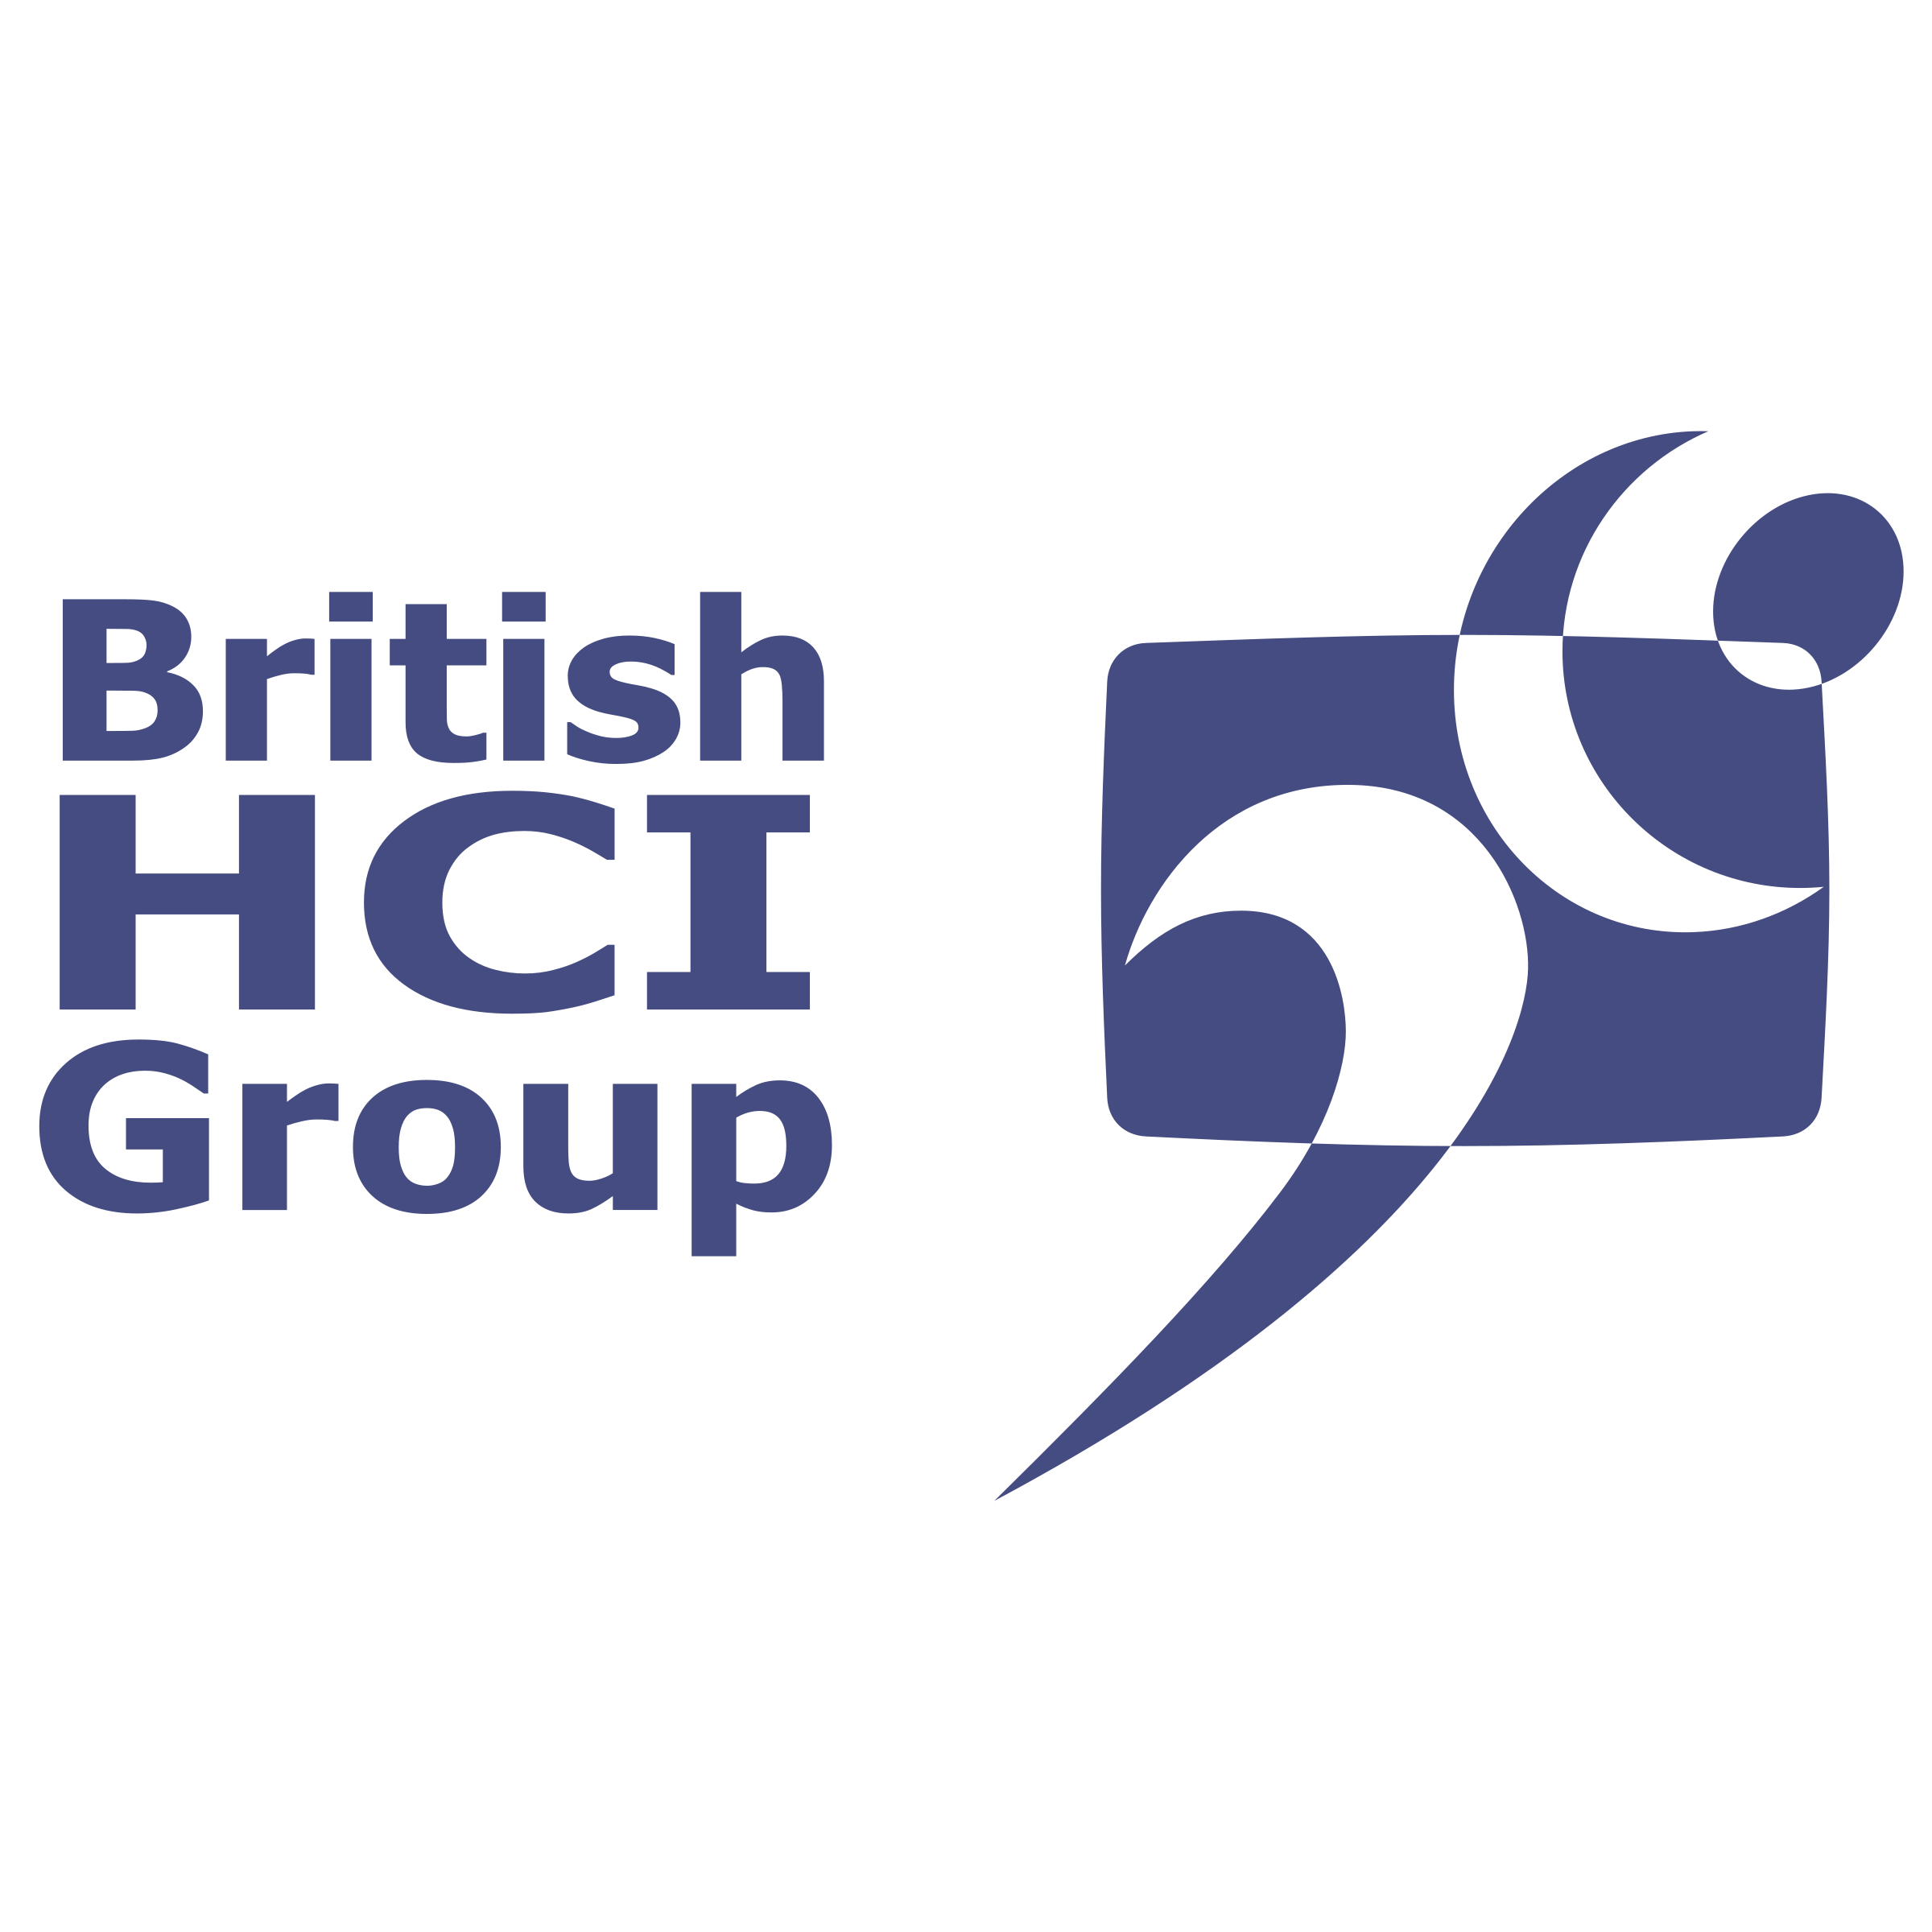 HCI Logo - British HCI Group Logo PNG Transparent & SVG Vector - Freebie Supply